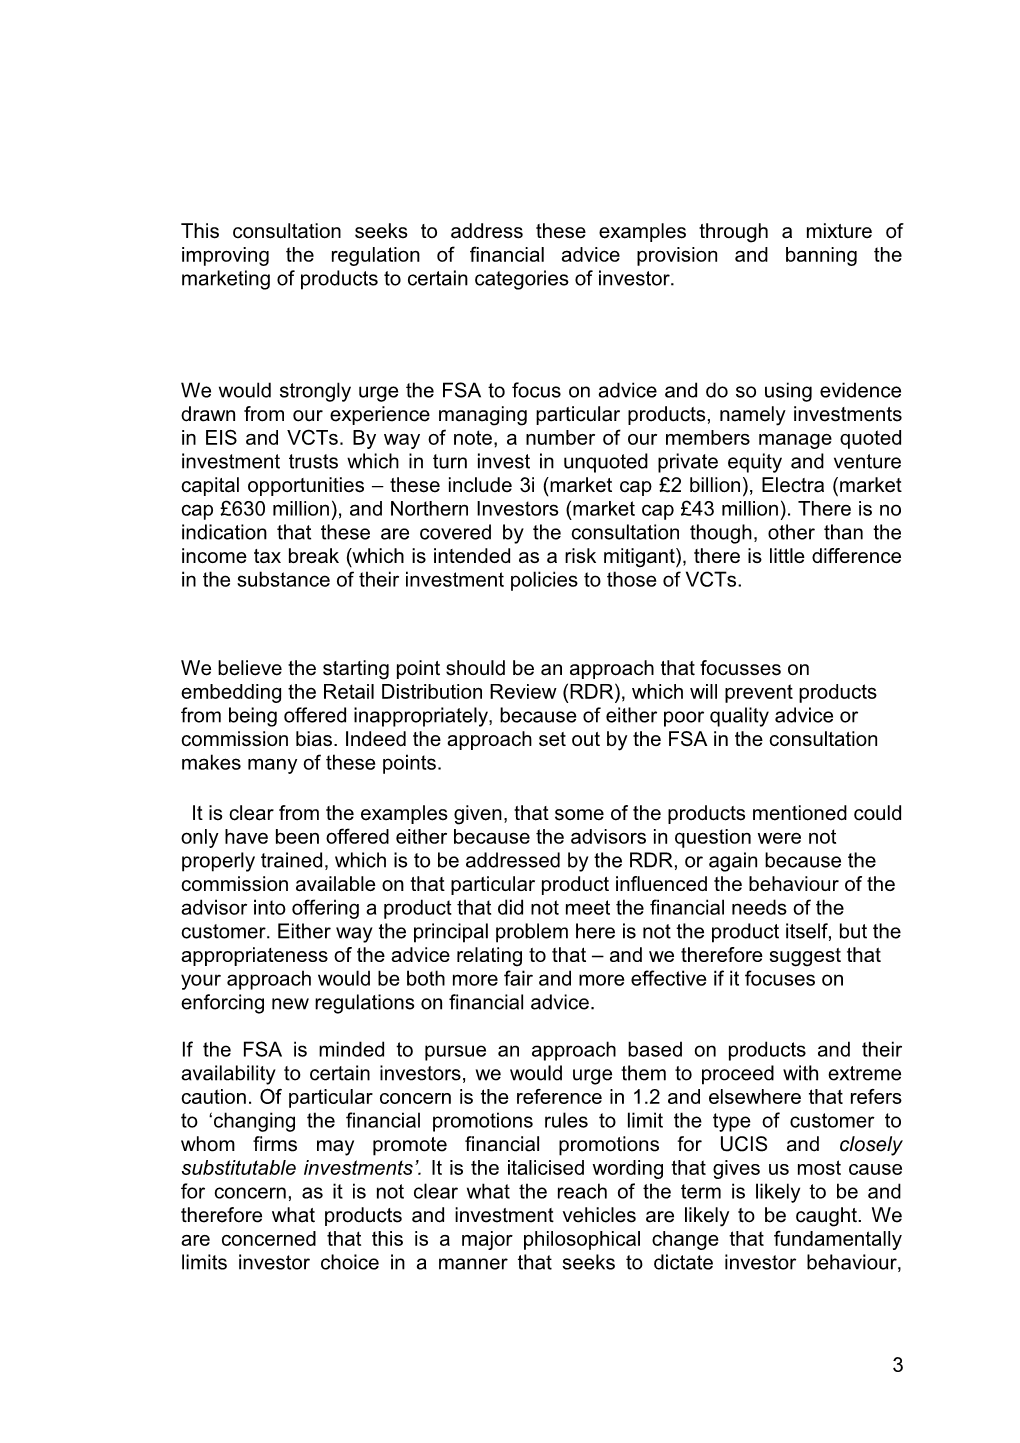 BVCA Response to FSA Consultation CP12/19